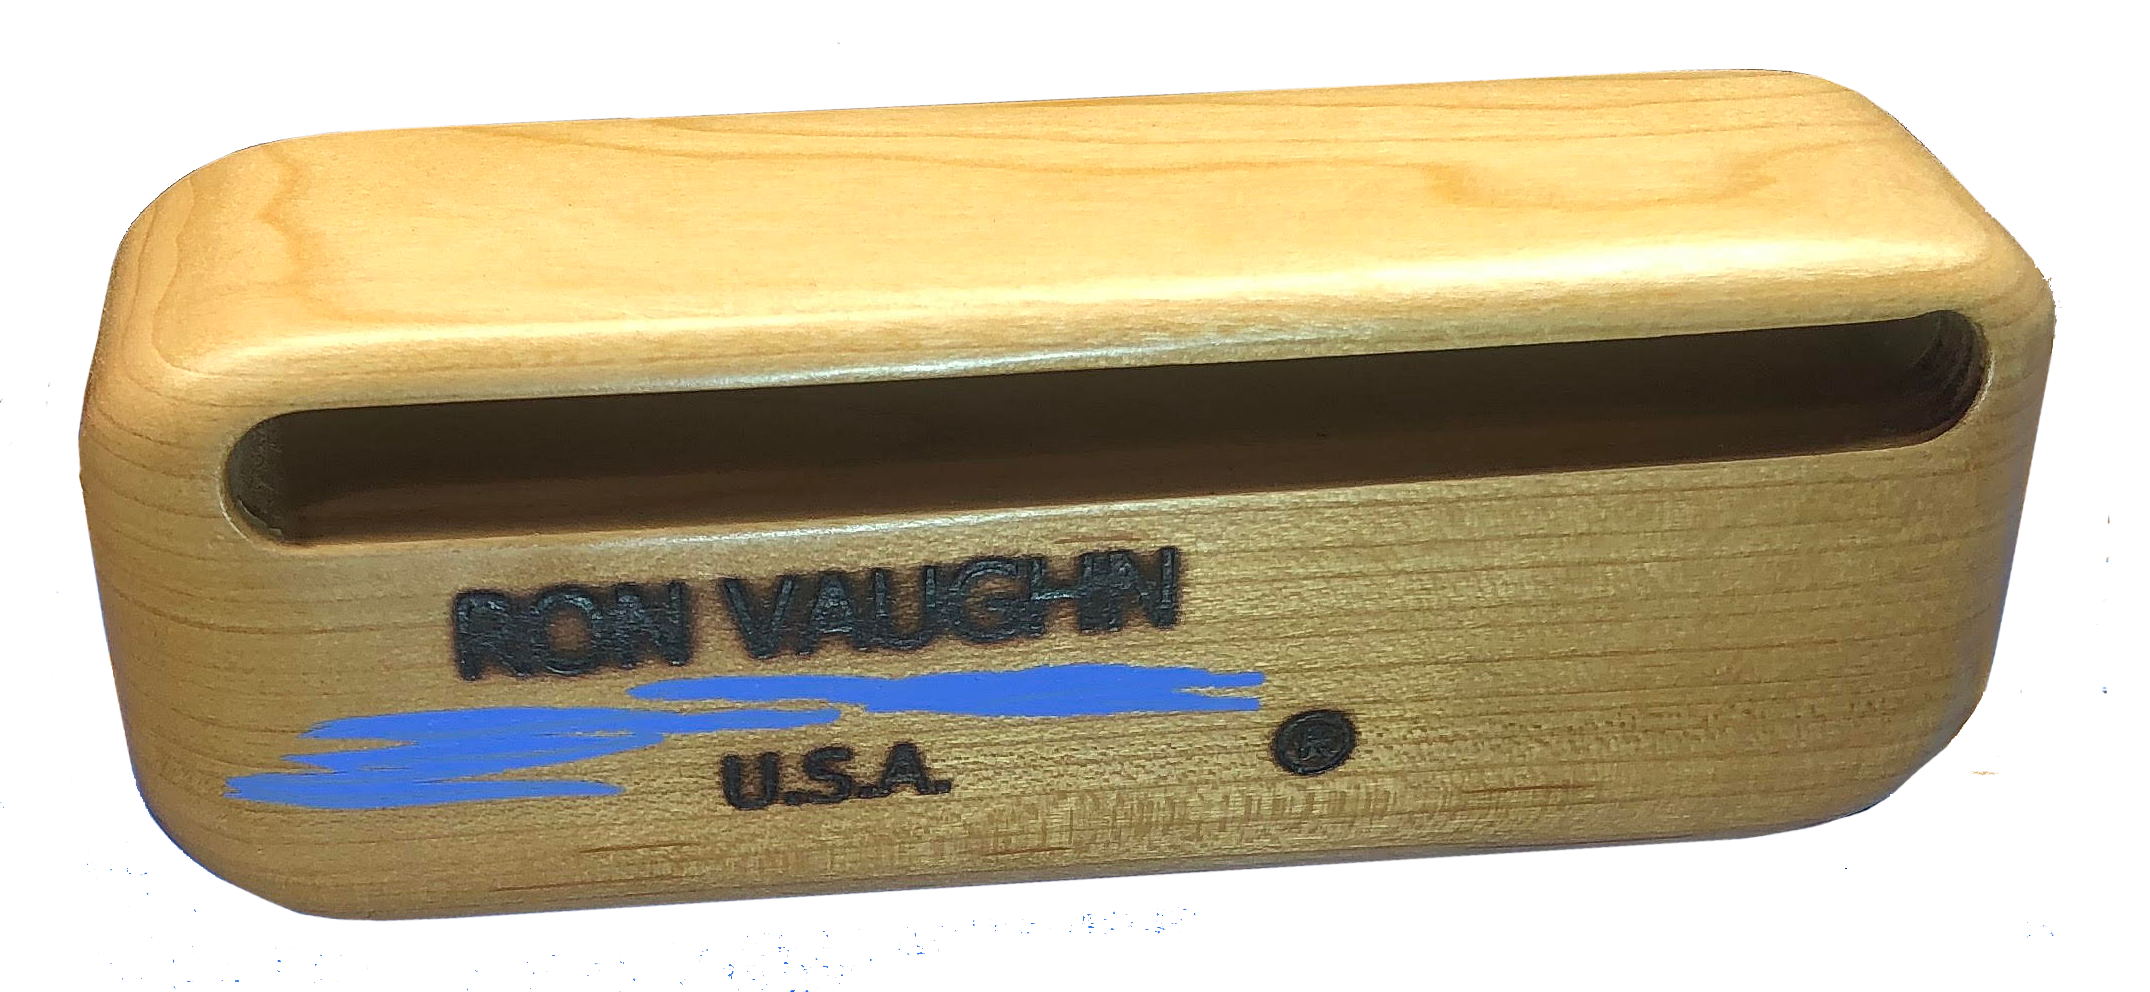 W-1.4 Voiced & Tuned Signature Wood Block